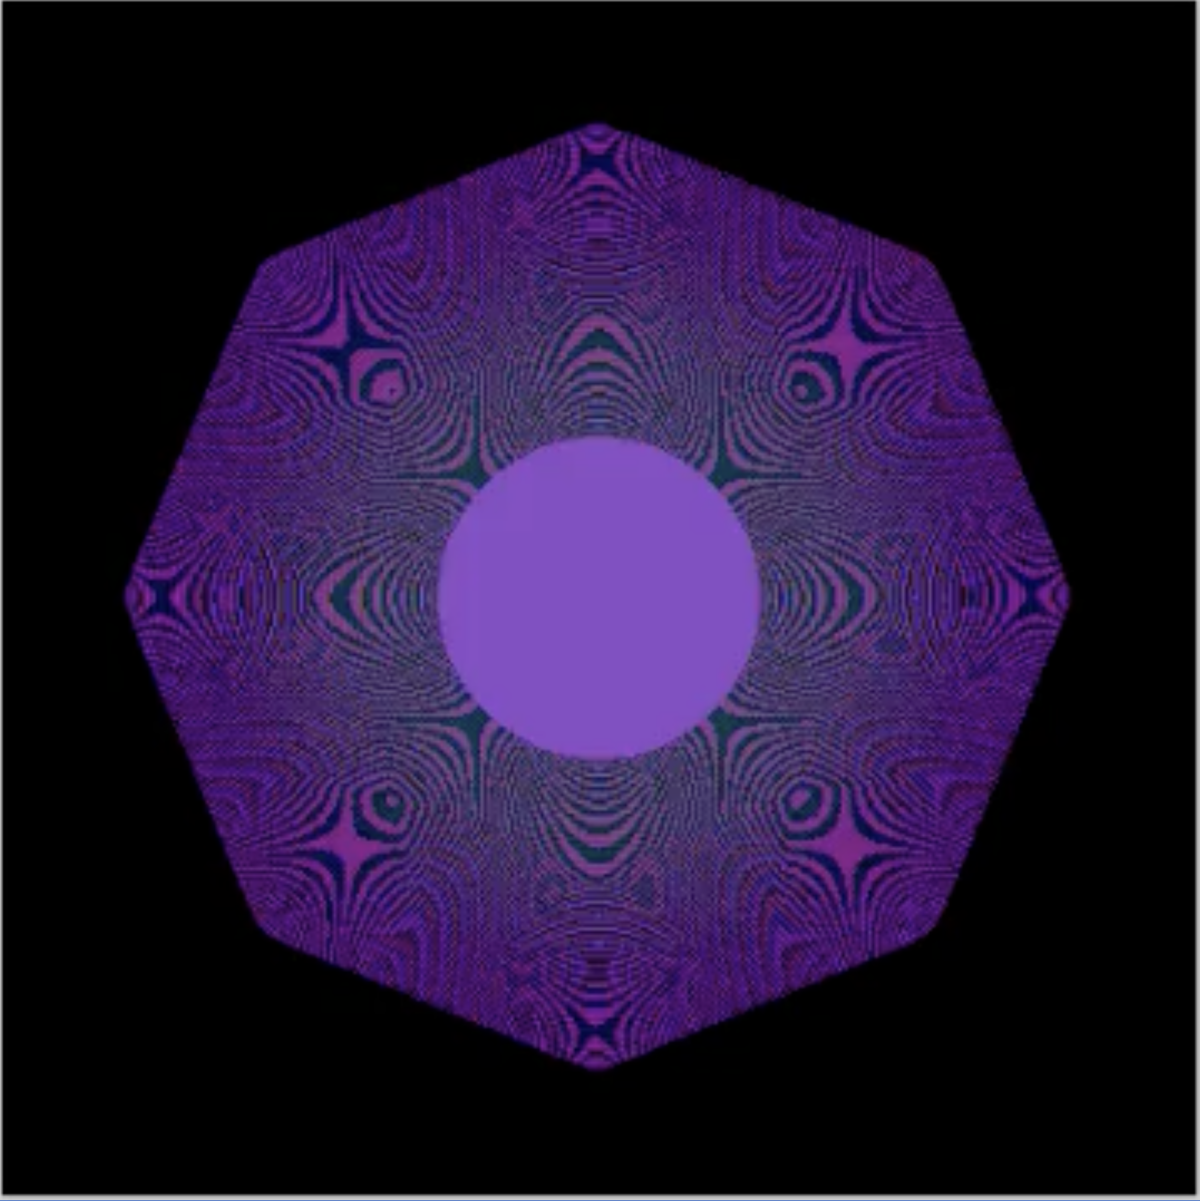 A still of the Quantum NFT, a pixelated purple dot.